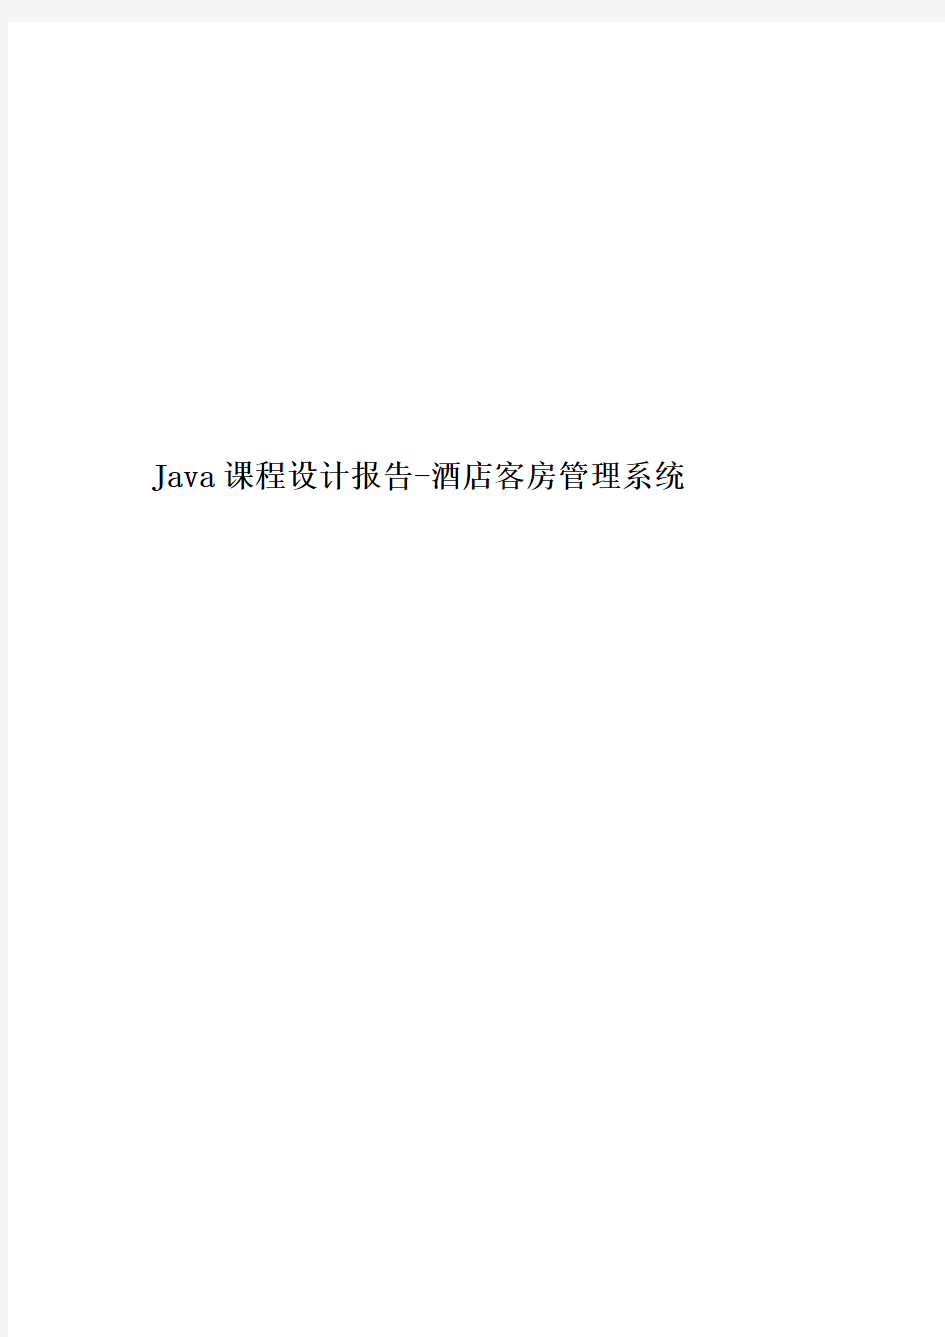 Java课程设计报告-酒店客房管理系统